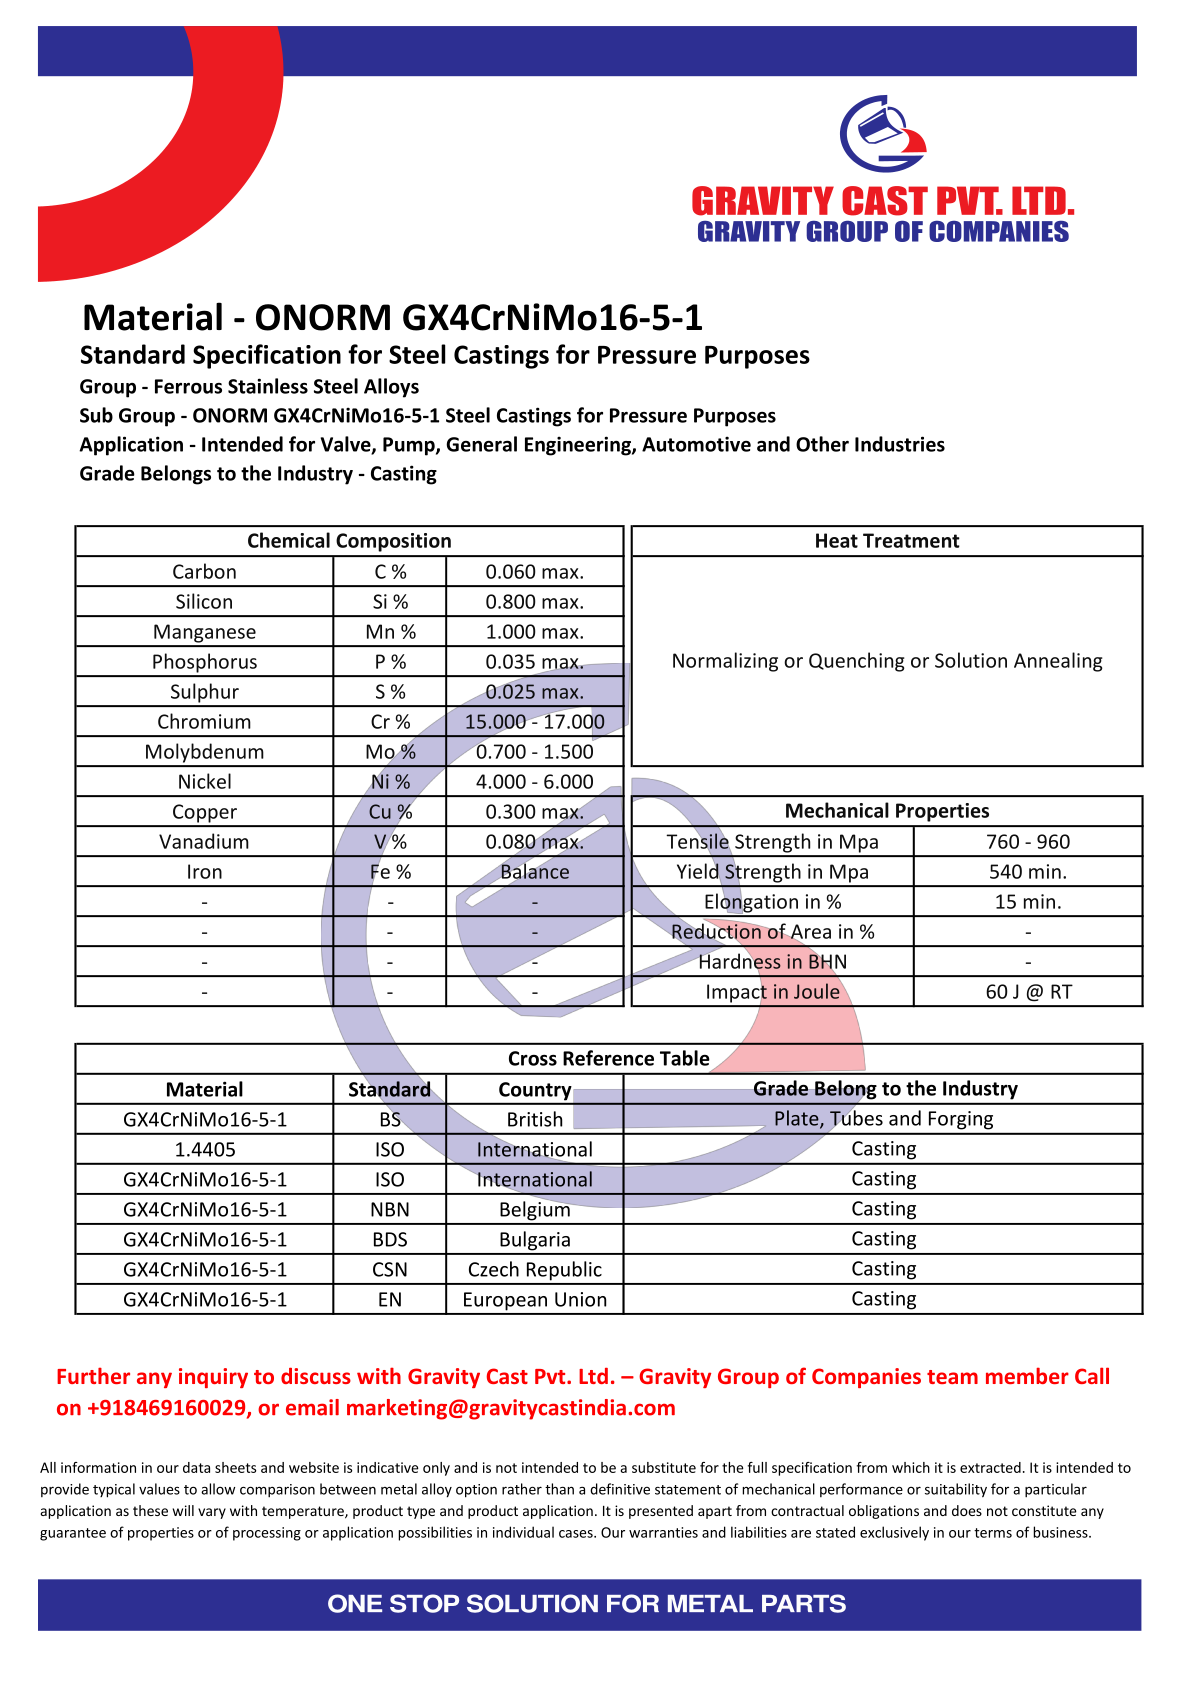 ONORM GX4CrNiMo16-5-1.pdf